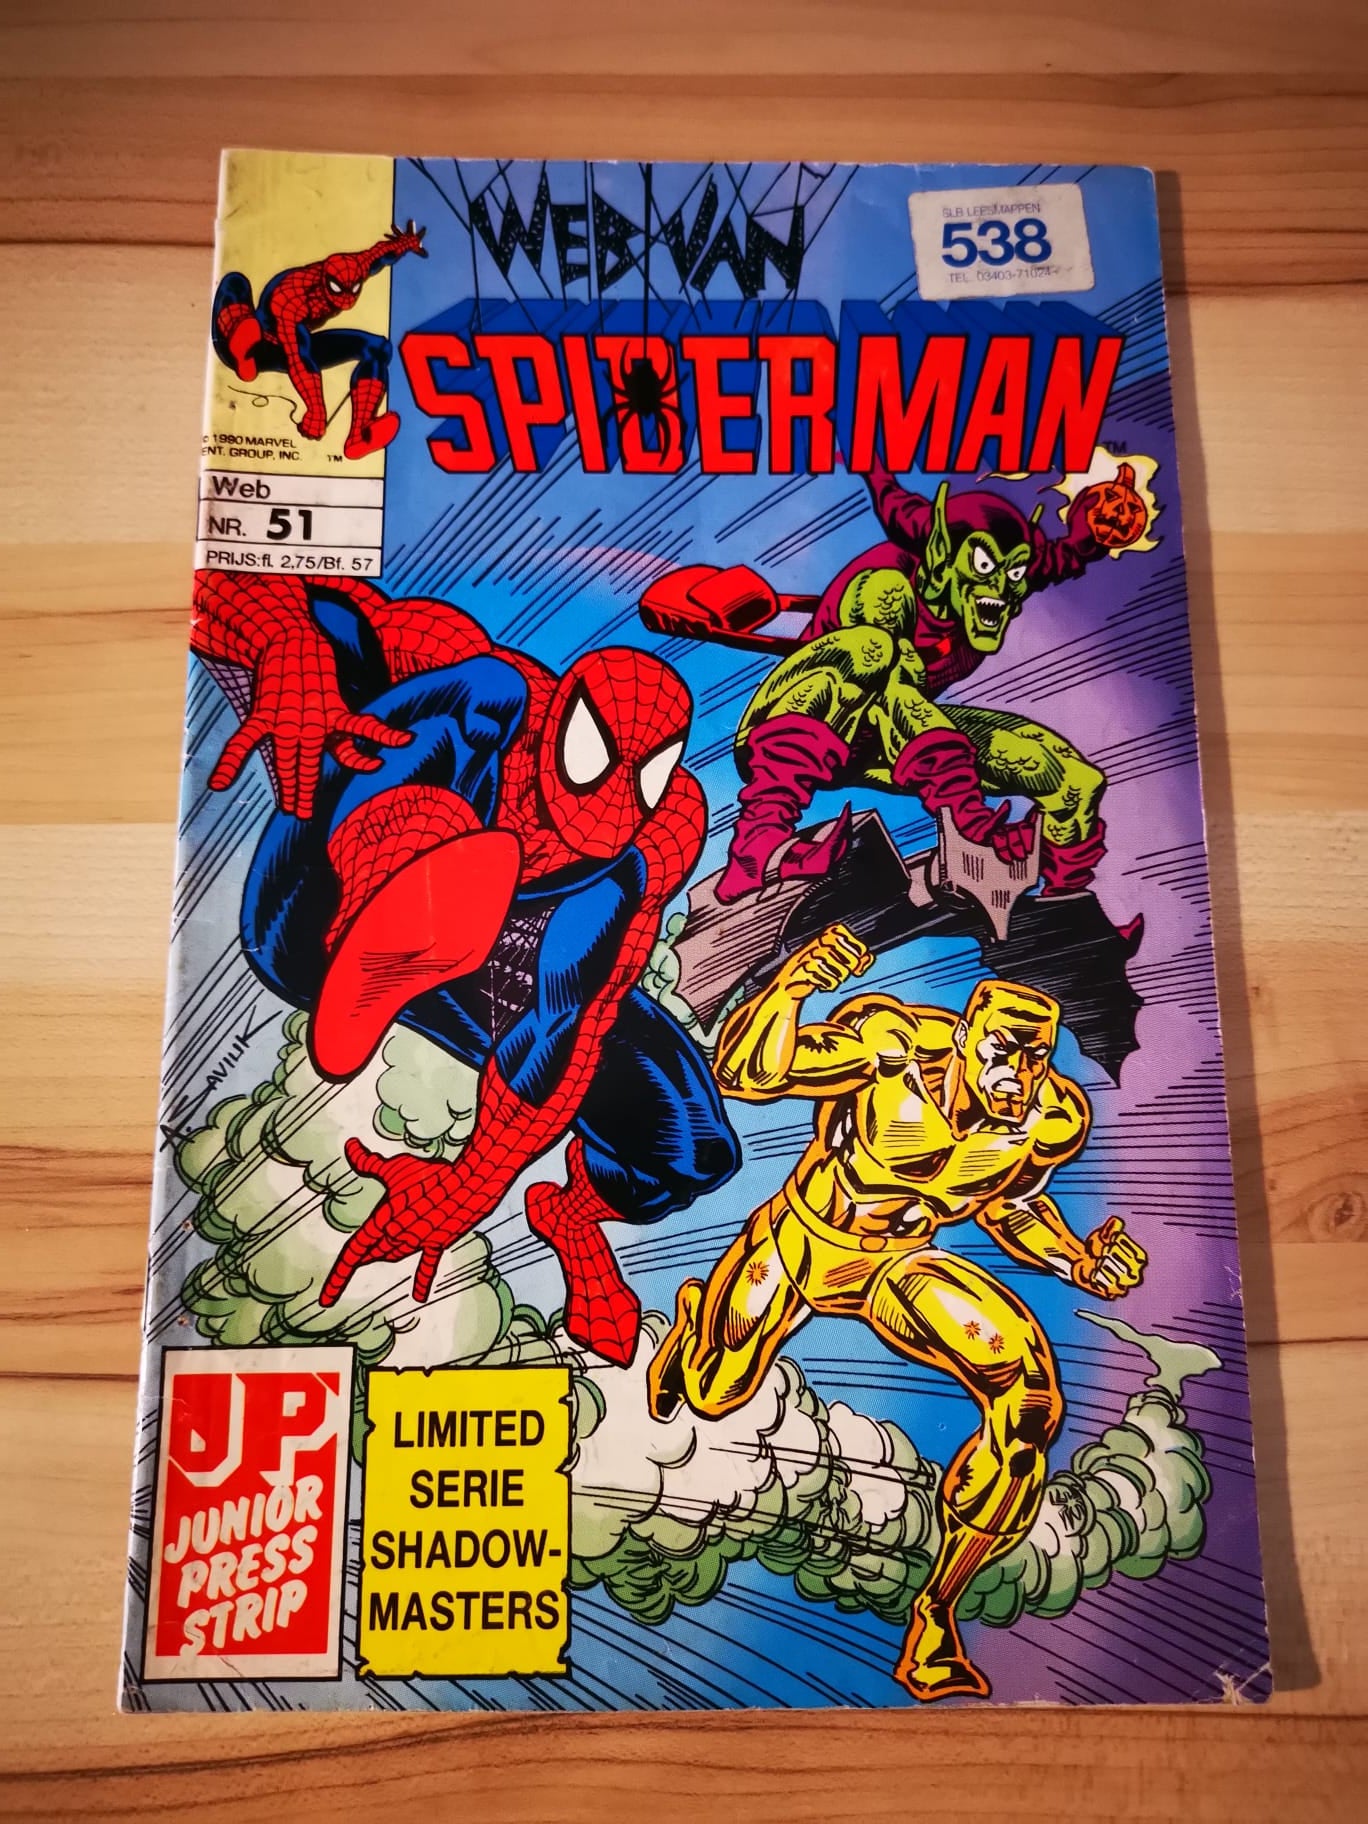 Web van spiderman #51